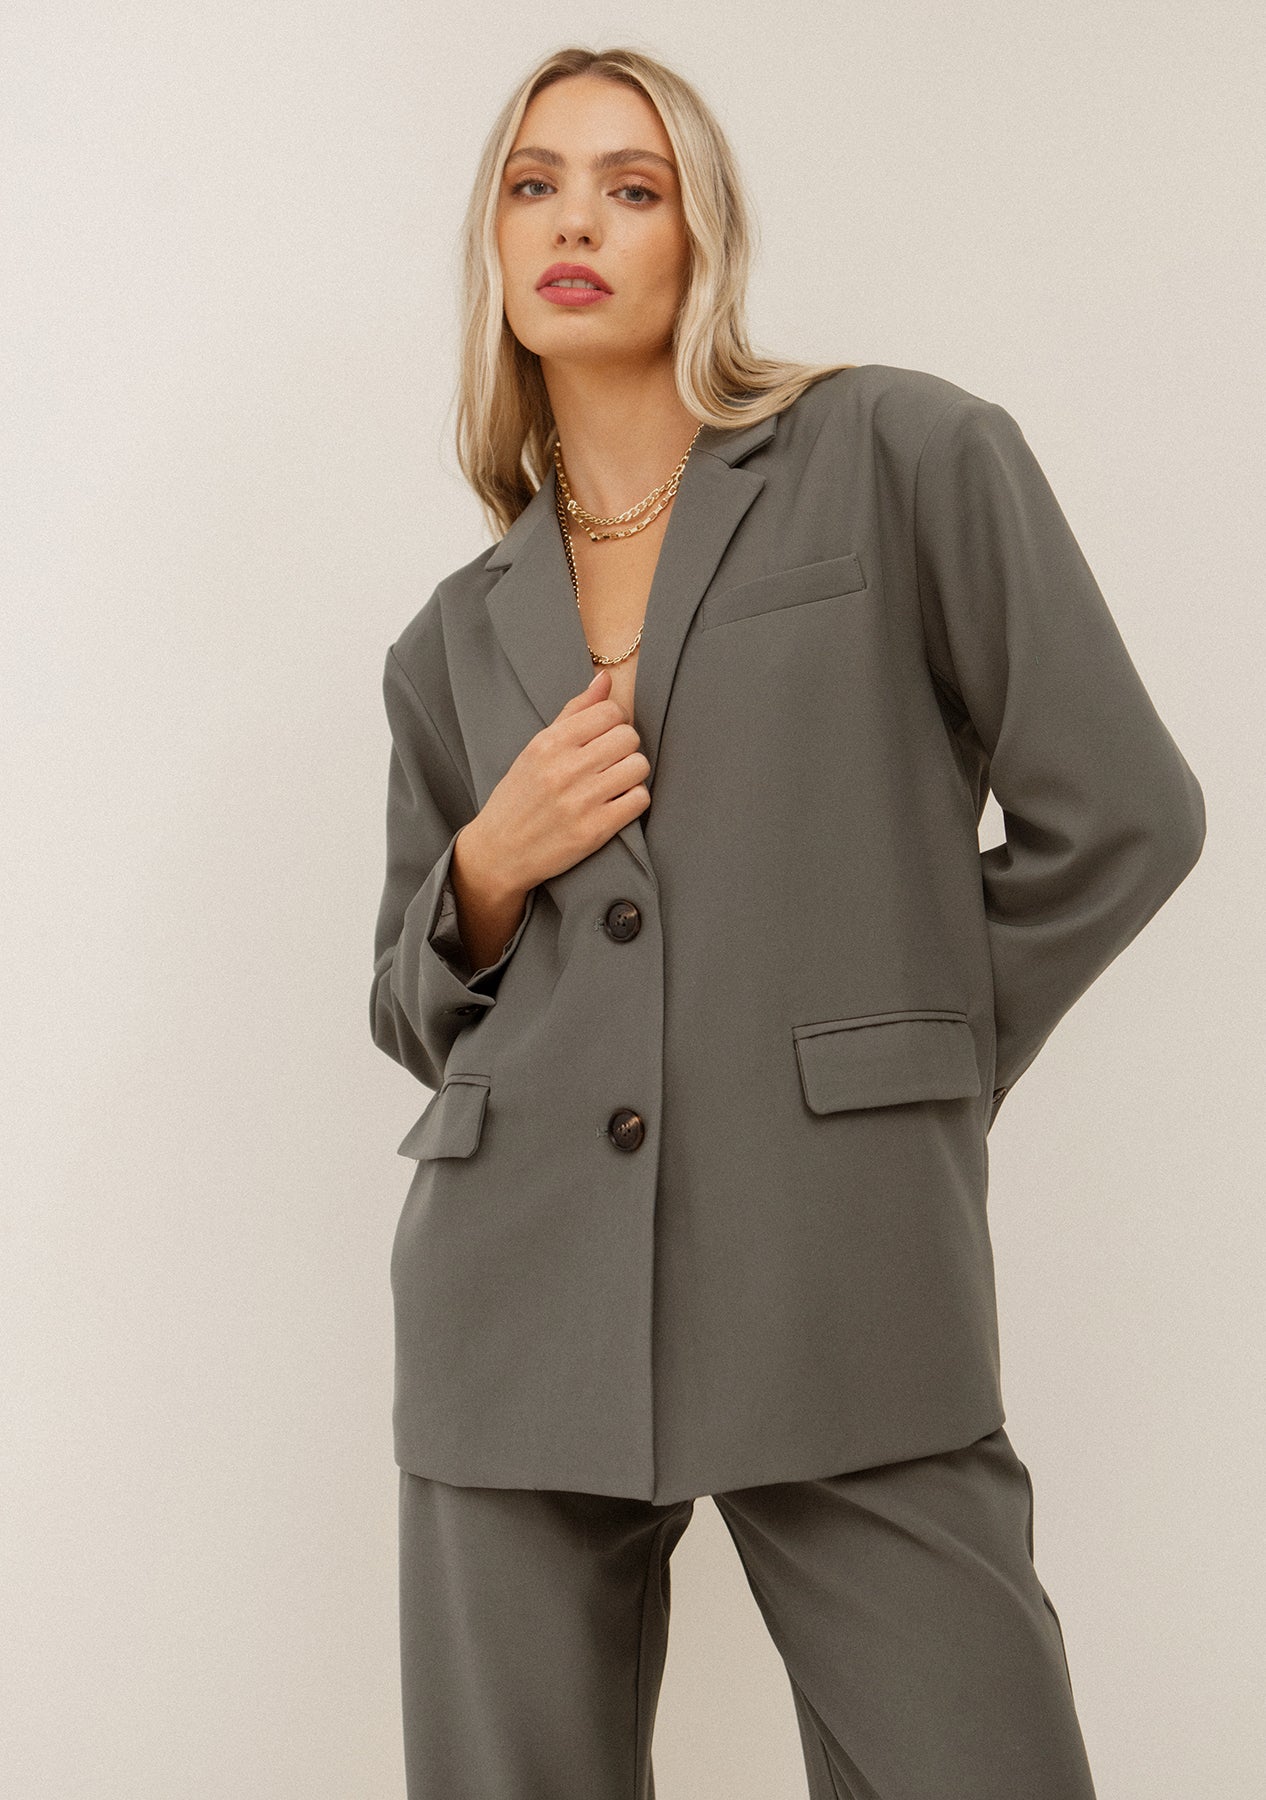 Shop Stylish Long Blazer for Women – Women's Blazer Sale